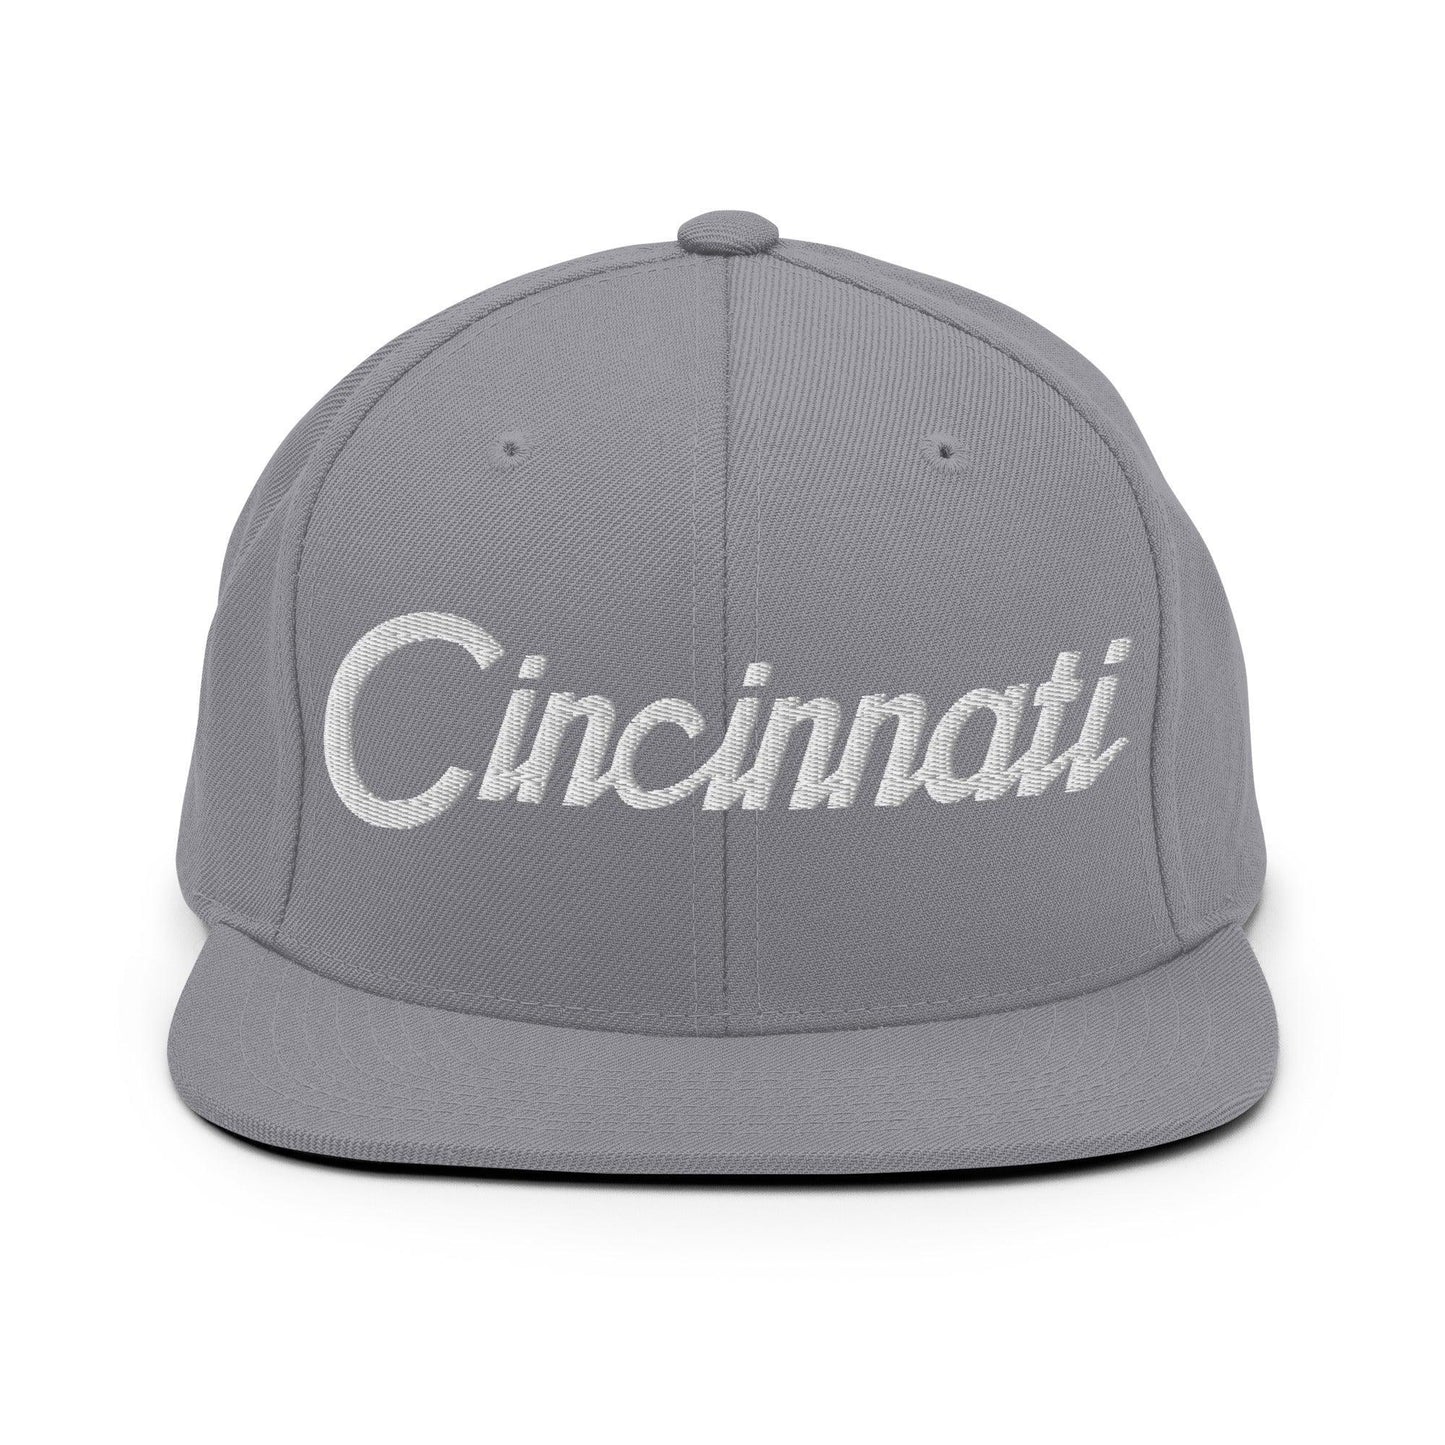 Cincinnati Script Snapback Hat Silver